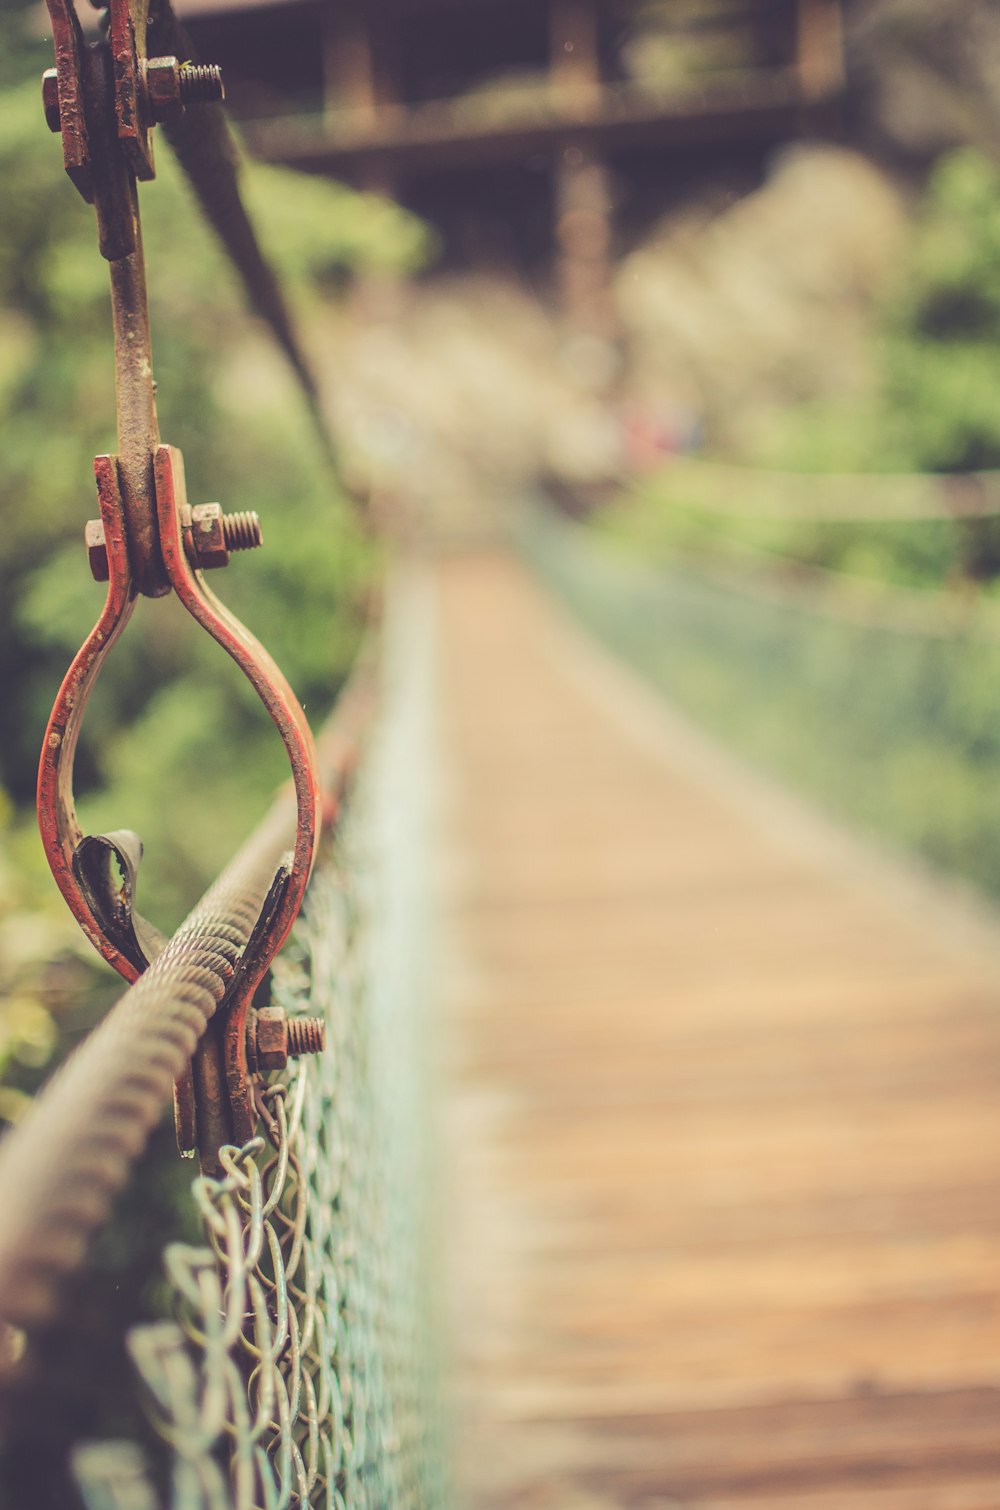 Metal details on a suspension foot bridge photo – Free Bridge Image on  Unsplash